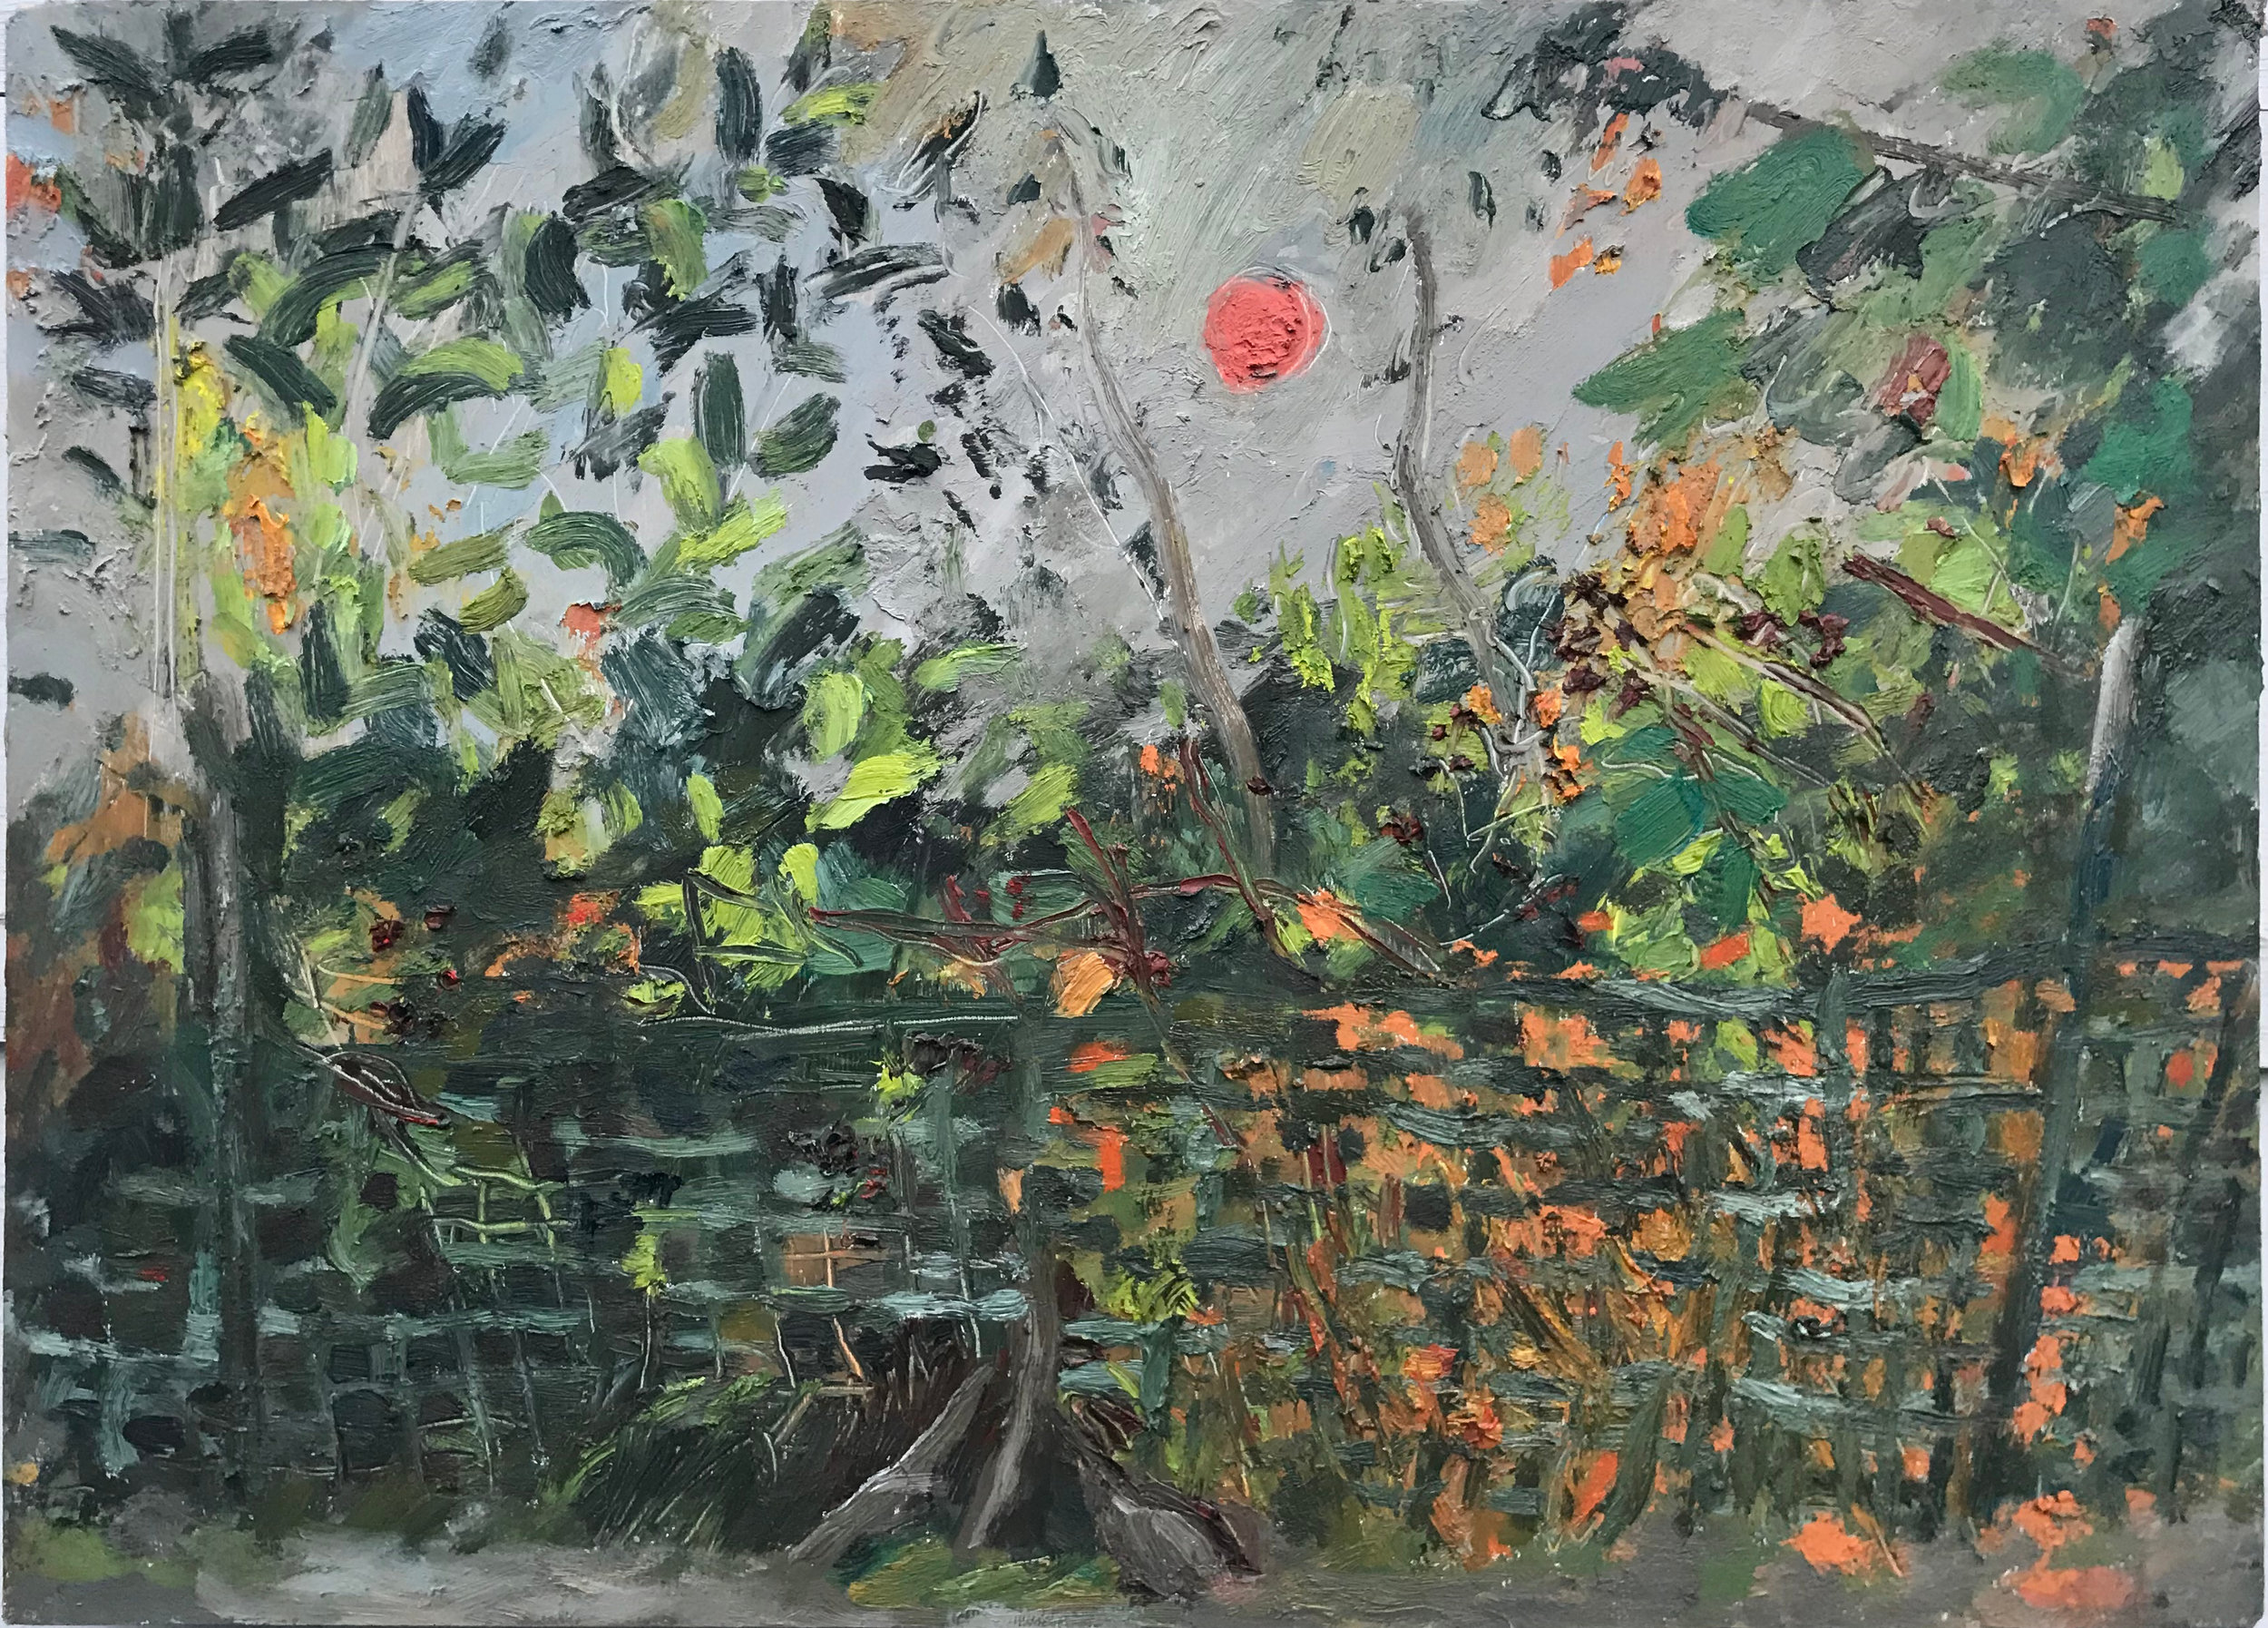 August Sun, oil on panel, 17 x 23.75 in., 2018